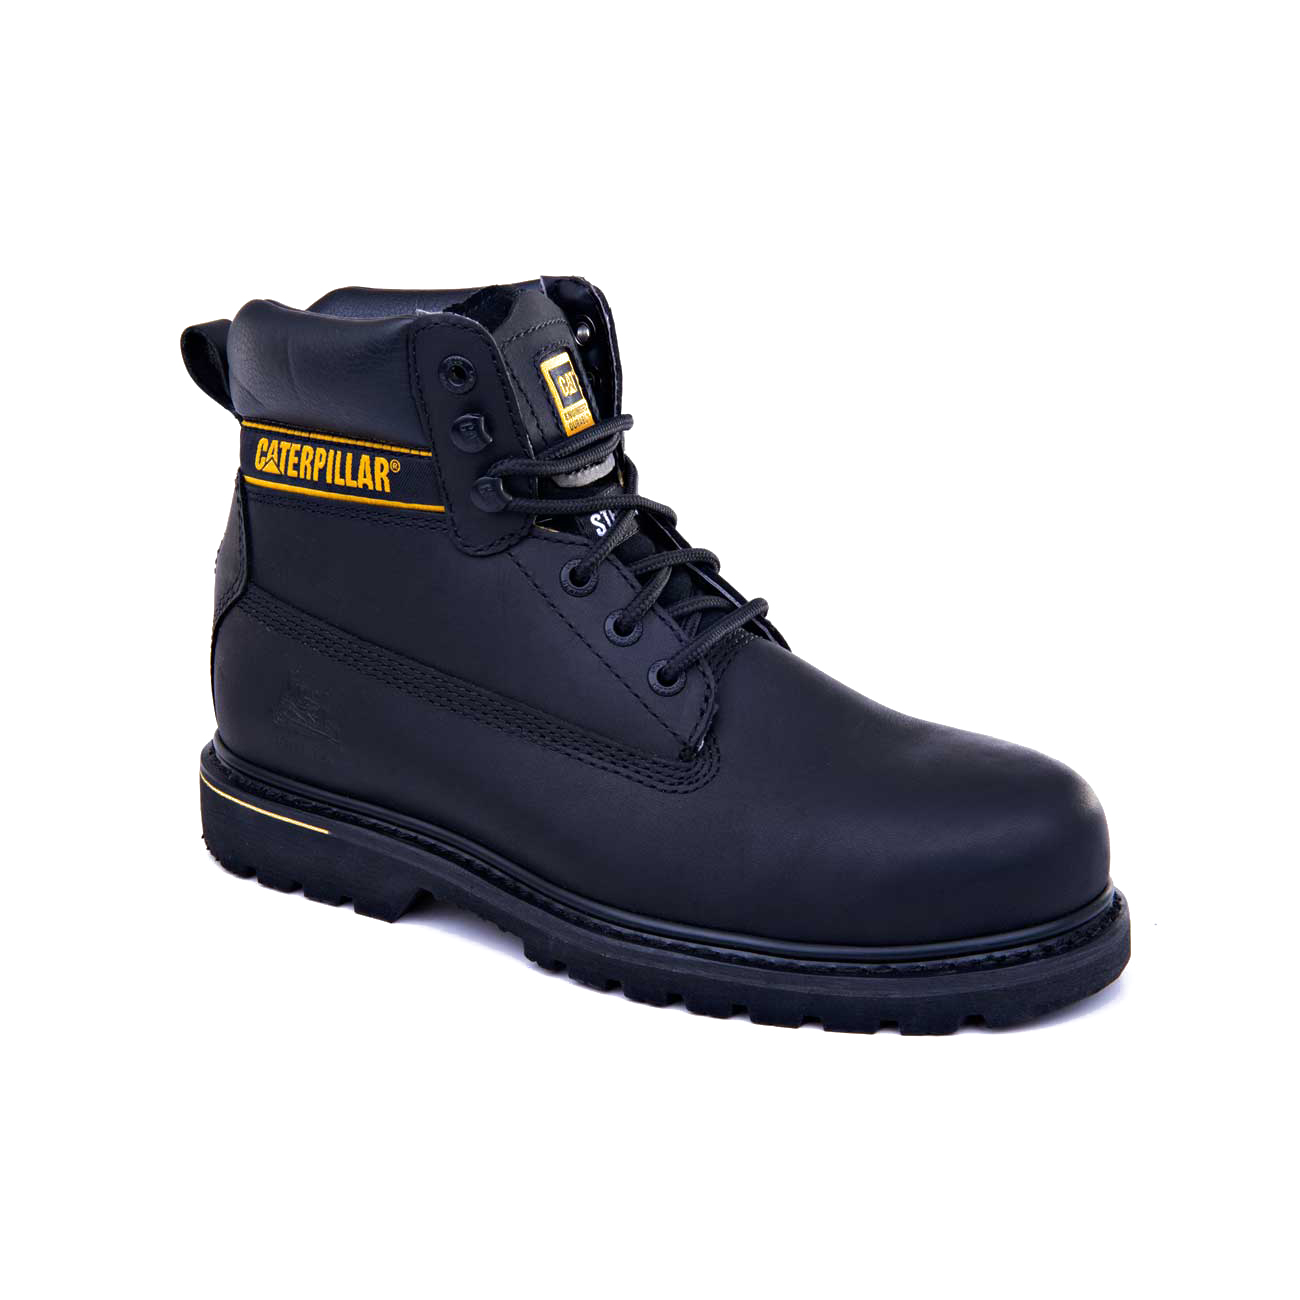 Caterpillar Safety Boots UAE Online - Caterpillar Holton St - Sa Mens - Black WBOSKN961